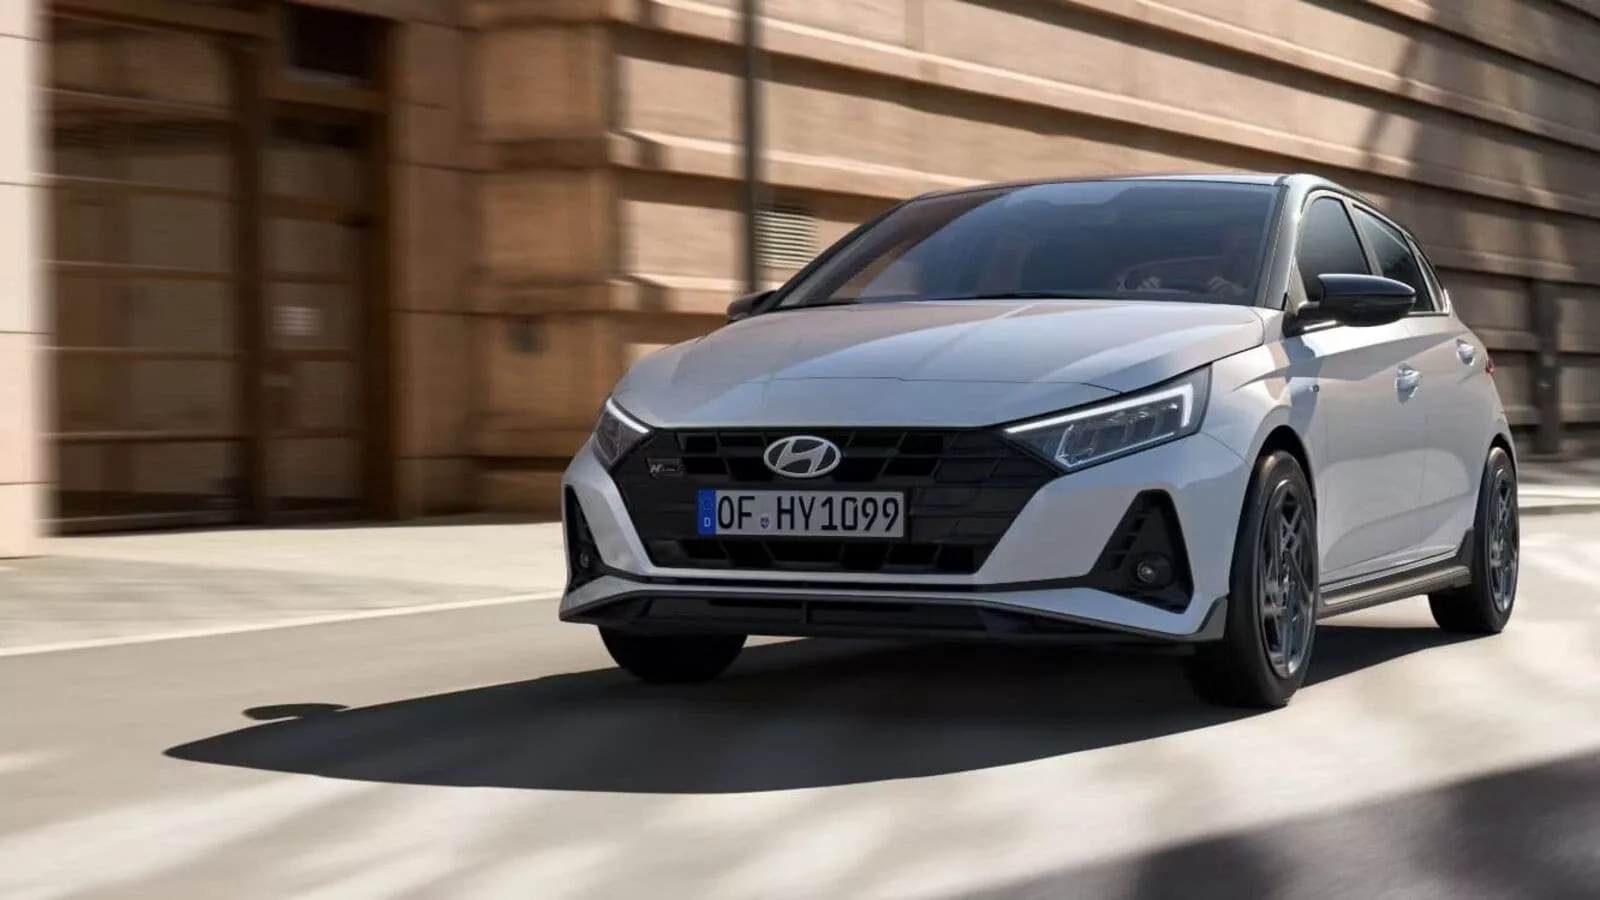 Hyundai N models might suggest just go hybrid soon. Check details